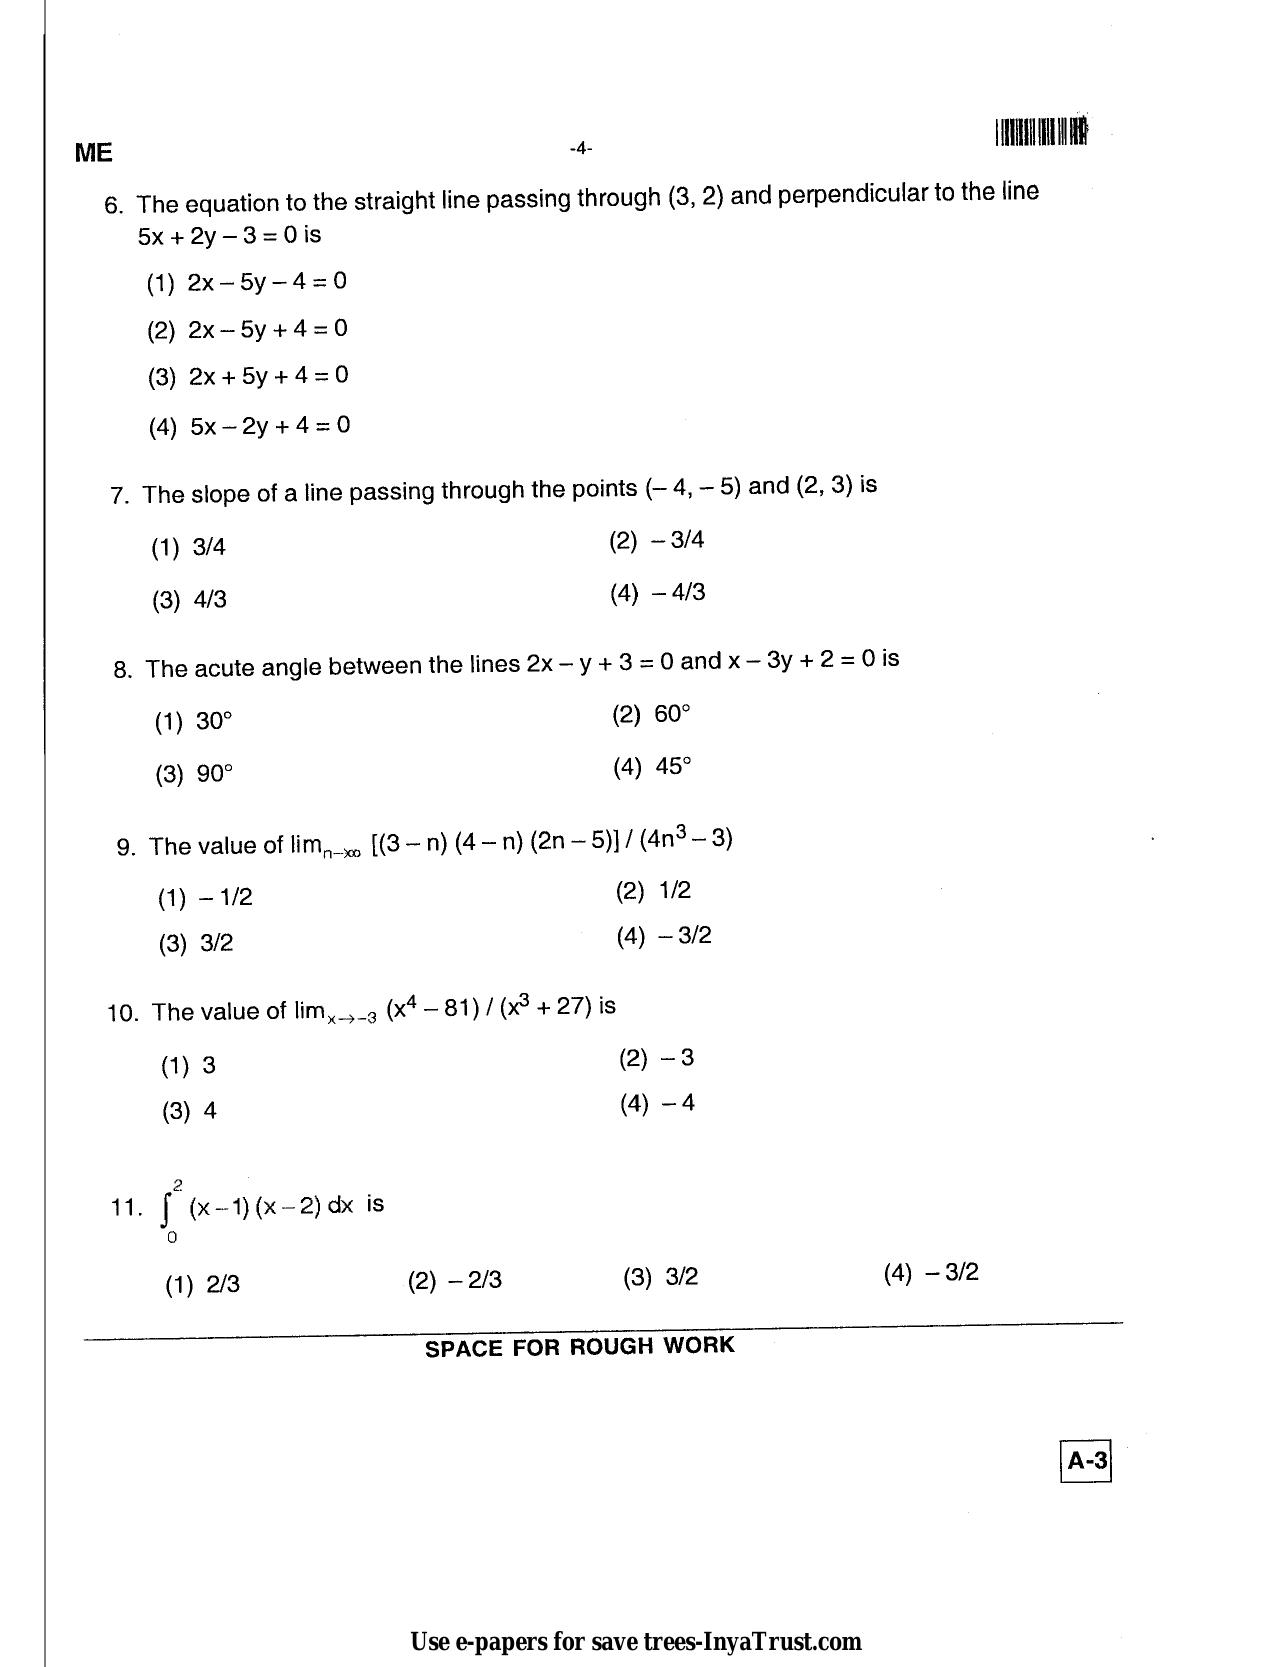 Karnataka Diploma CET- 2013 Mechanical Engineering Question Paper - Page 4